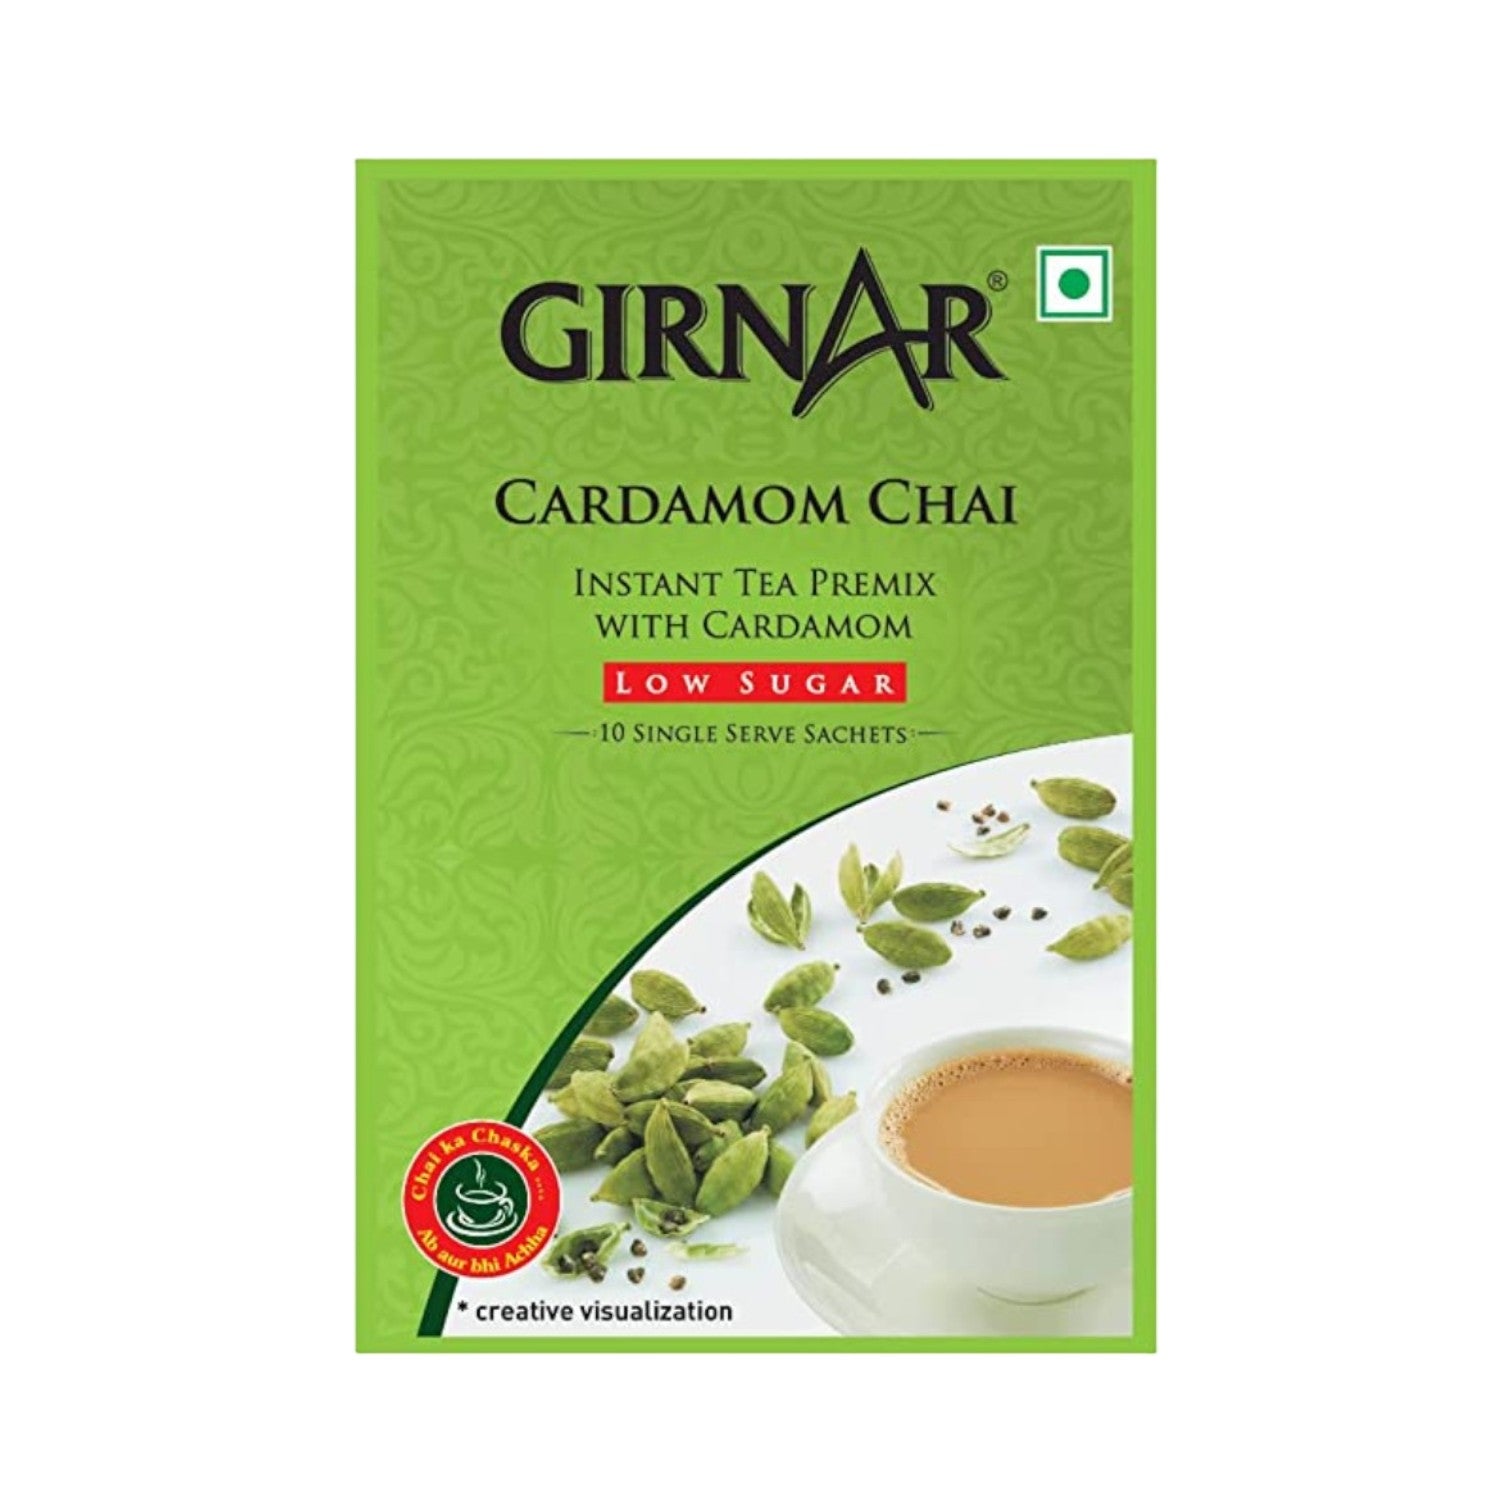 Girnar Instant Tea Premix Cardamom Chai Low Sugar 10 Sachets - Box